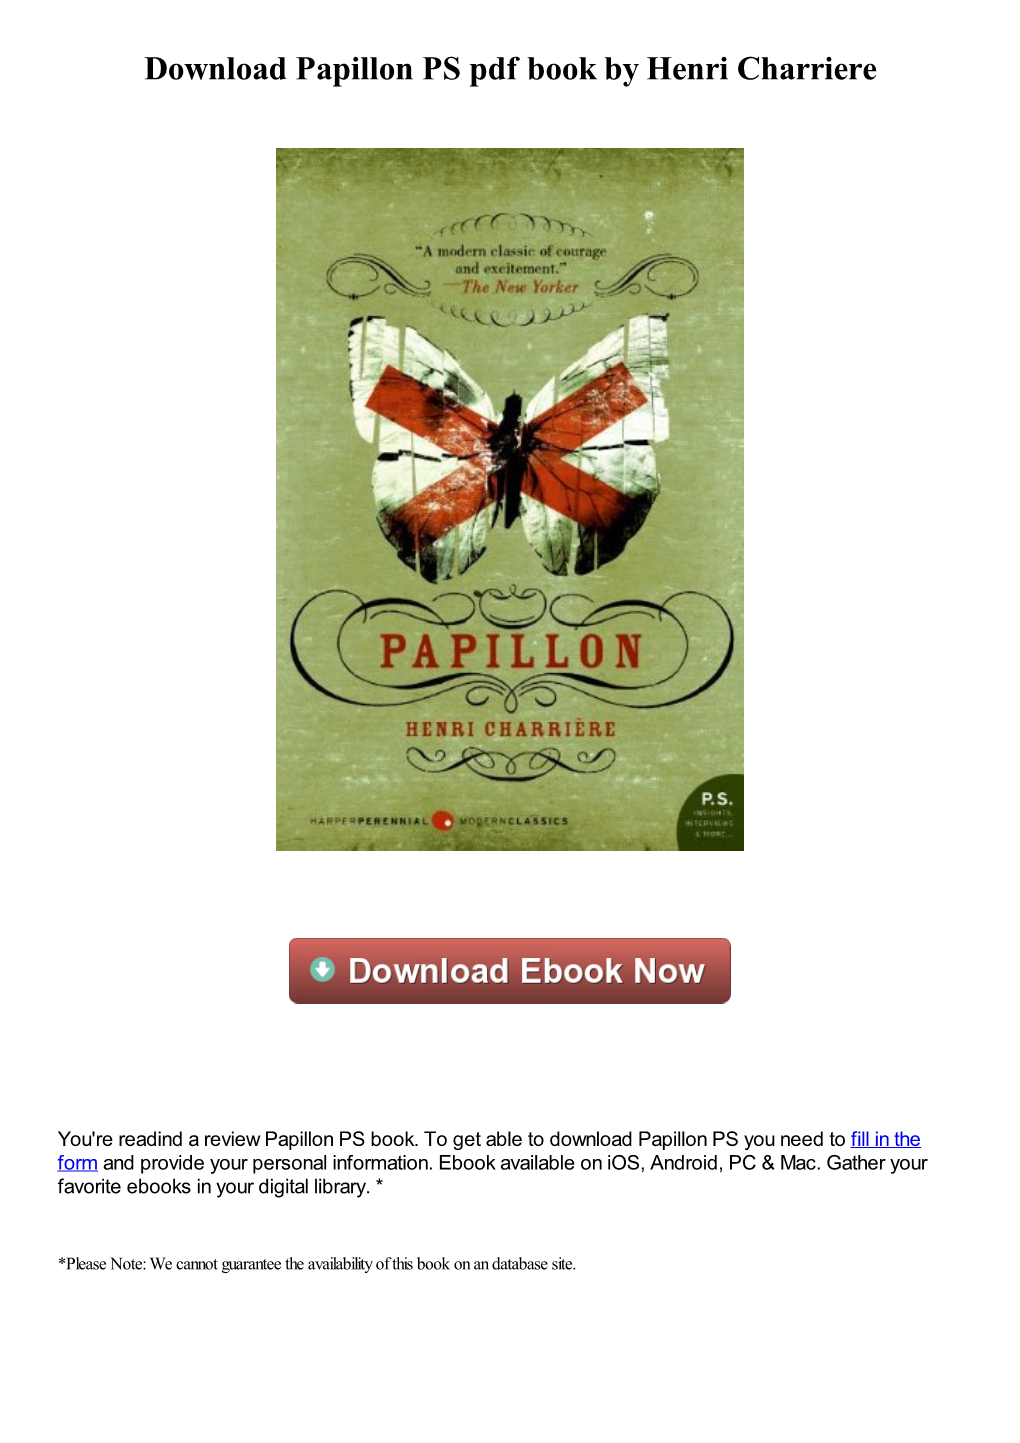 Download Papillon PS Pdf Book by Henri Charriere